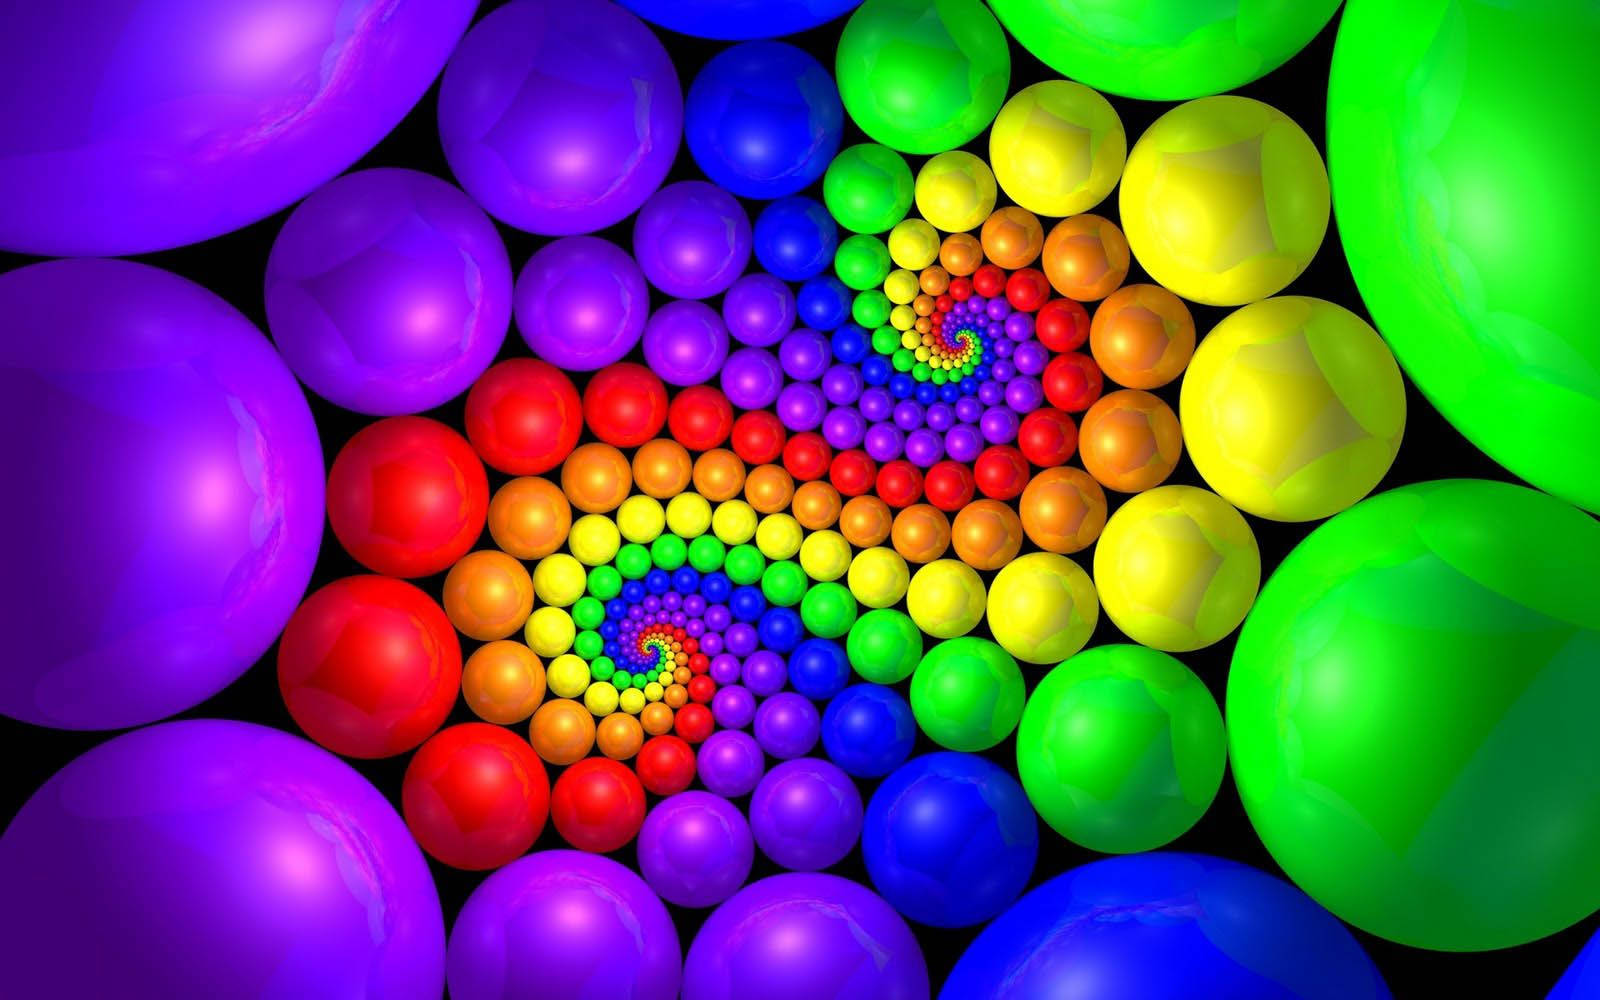 3D colorful balls in swirling design wallpaper.